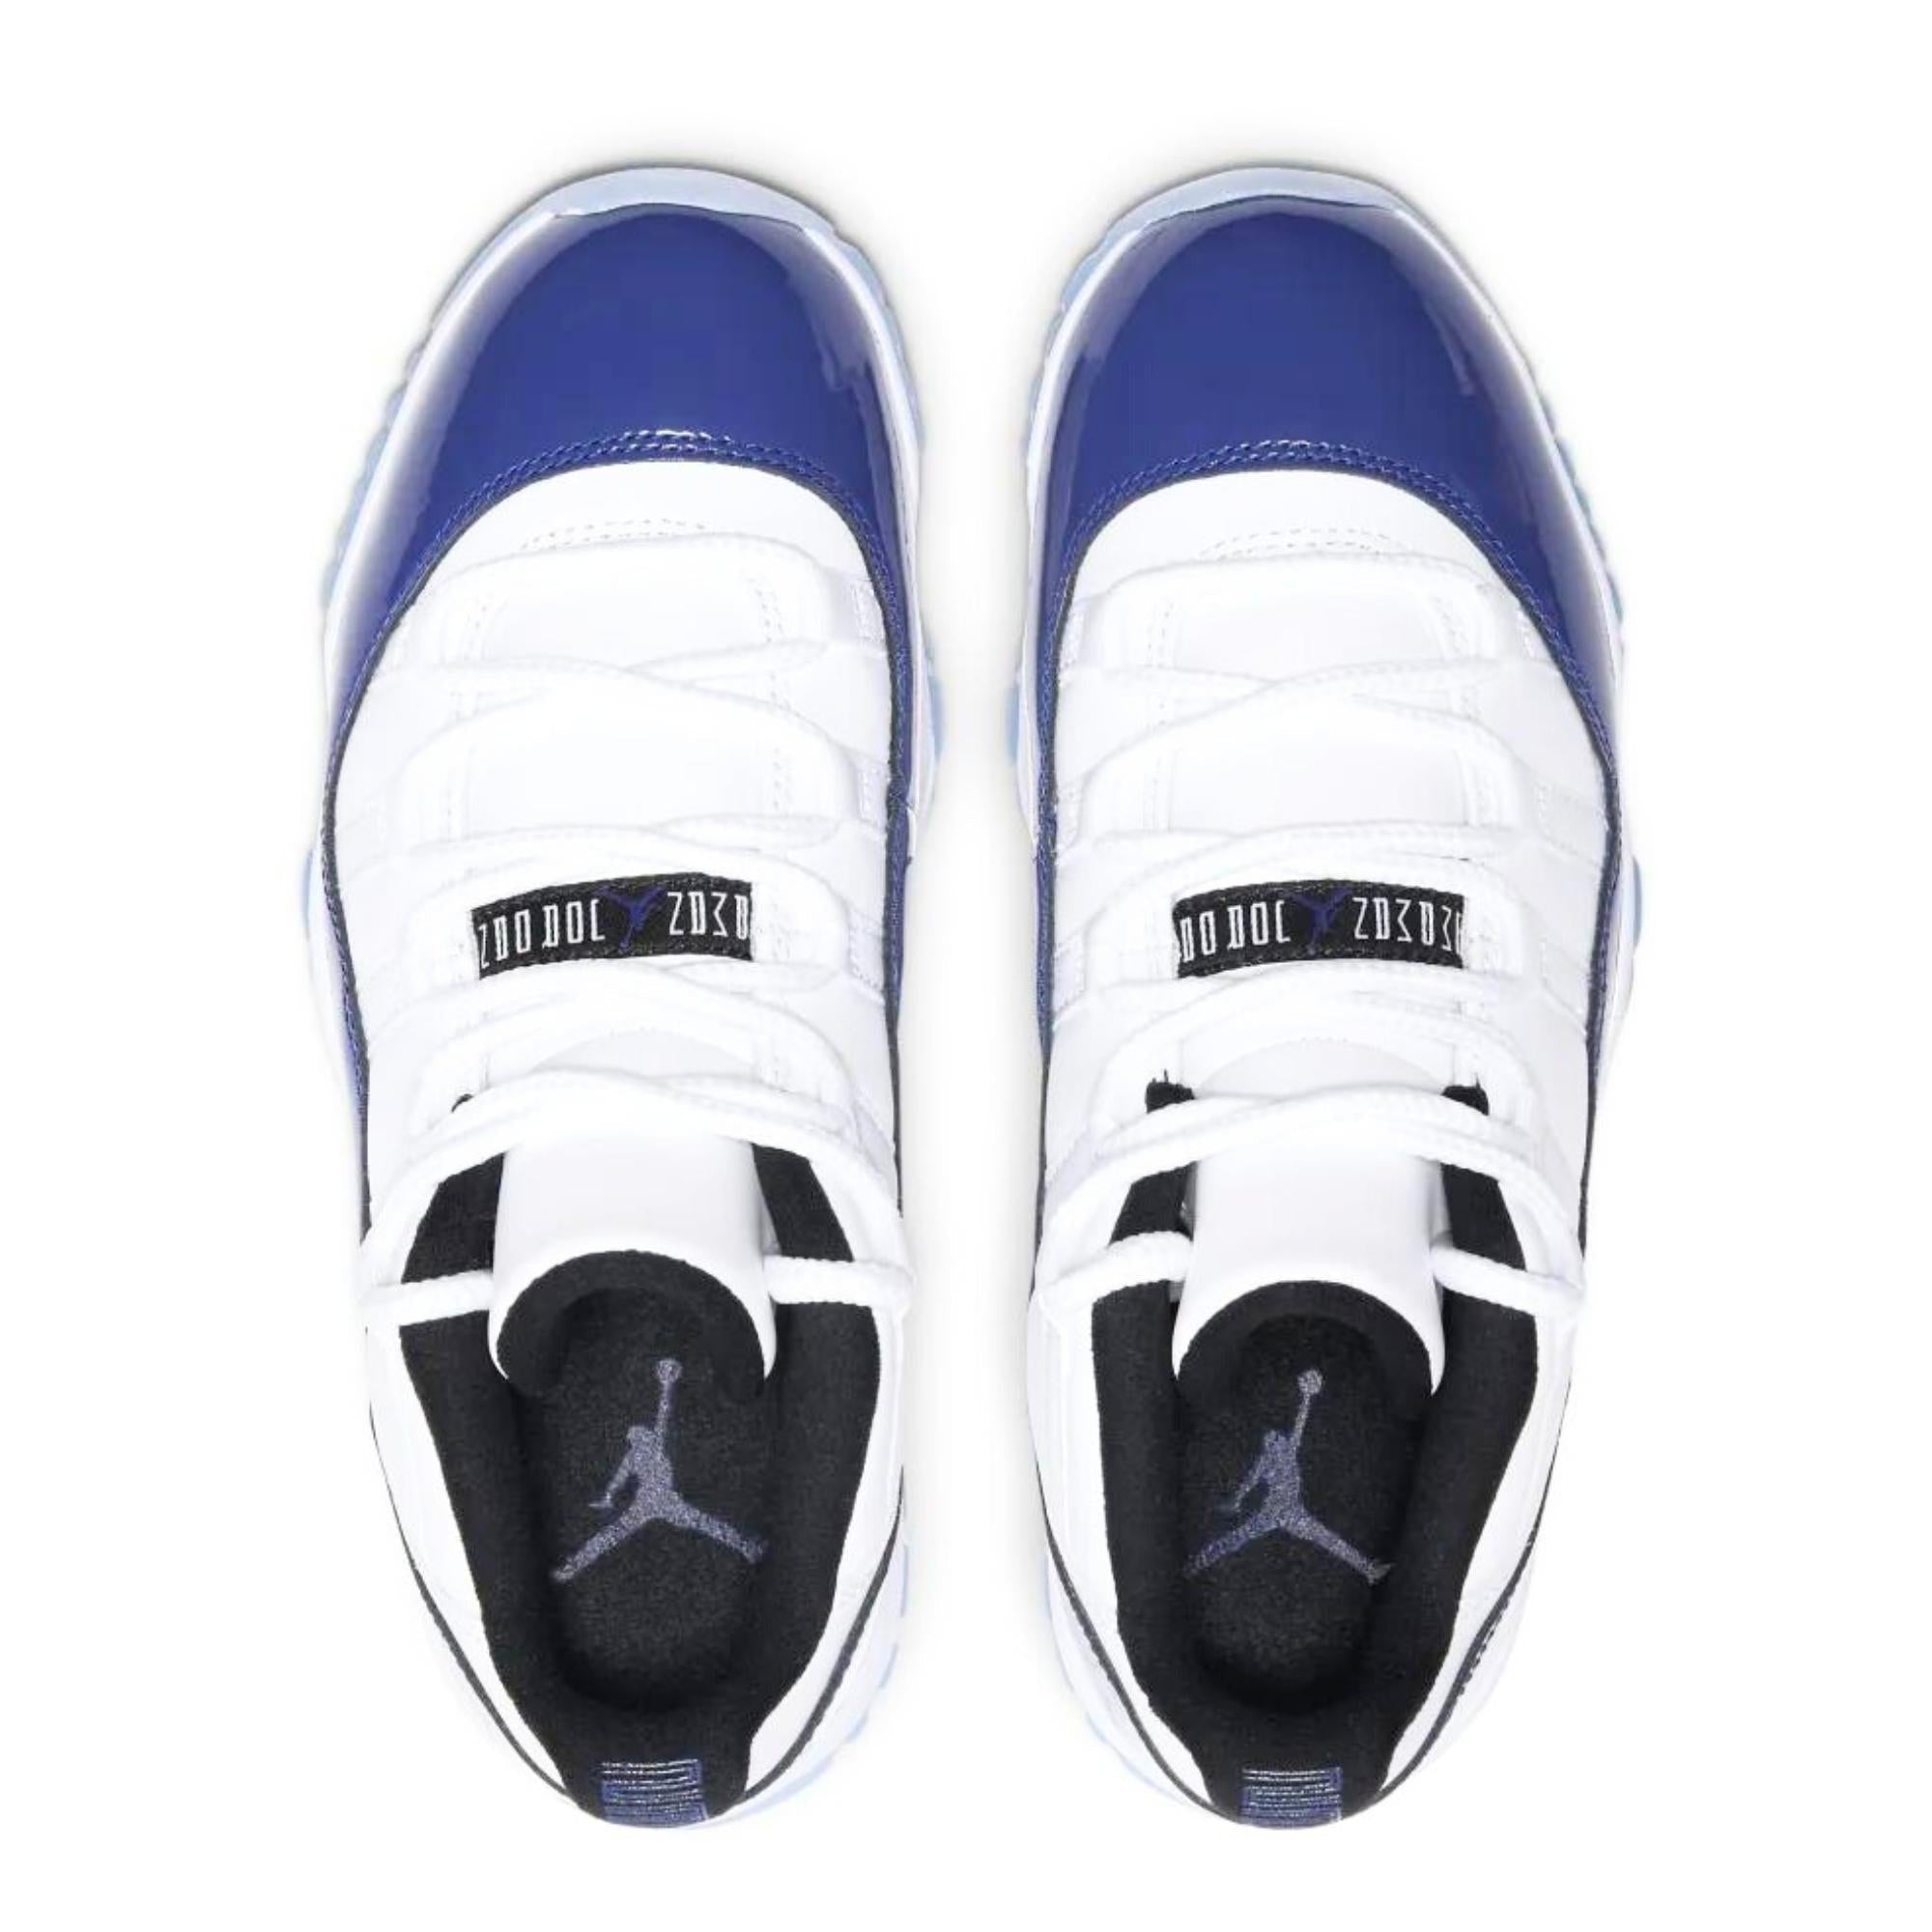 Air Jordan 11 Retro Low ’White Concord Sketch’ Sneakers